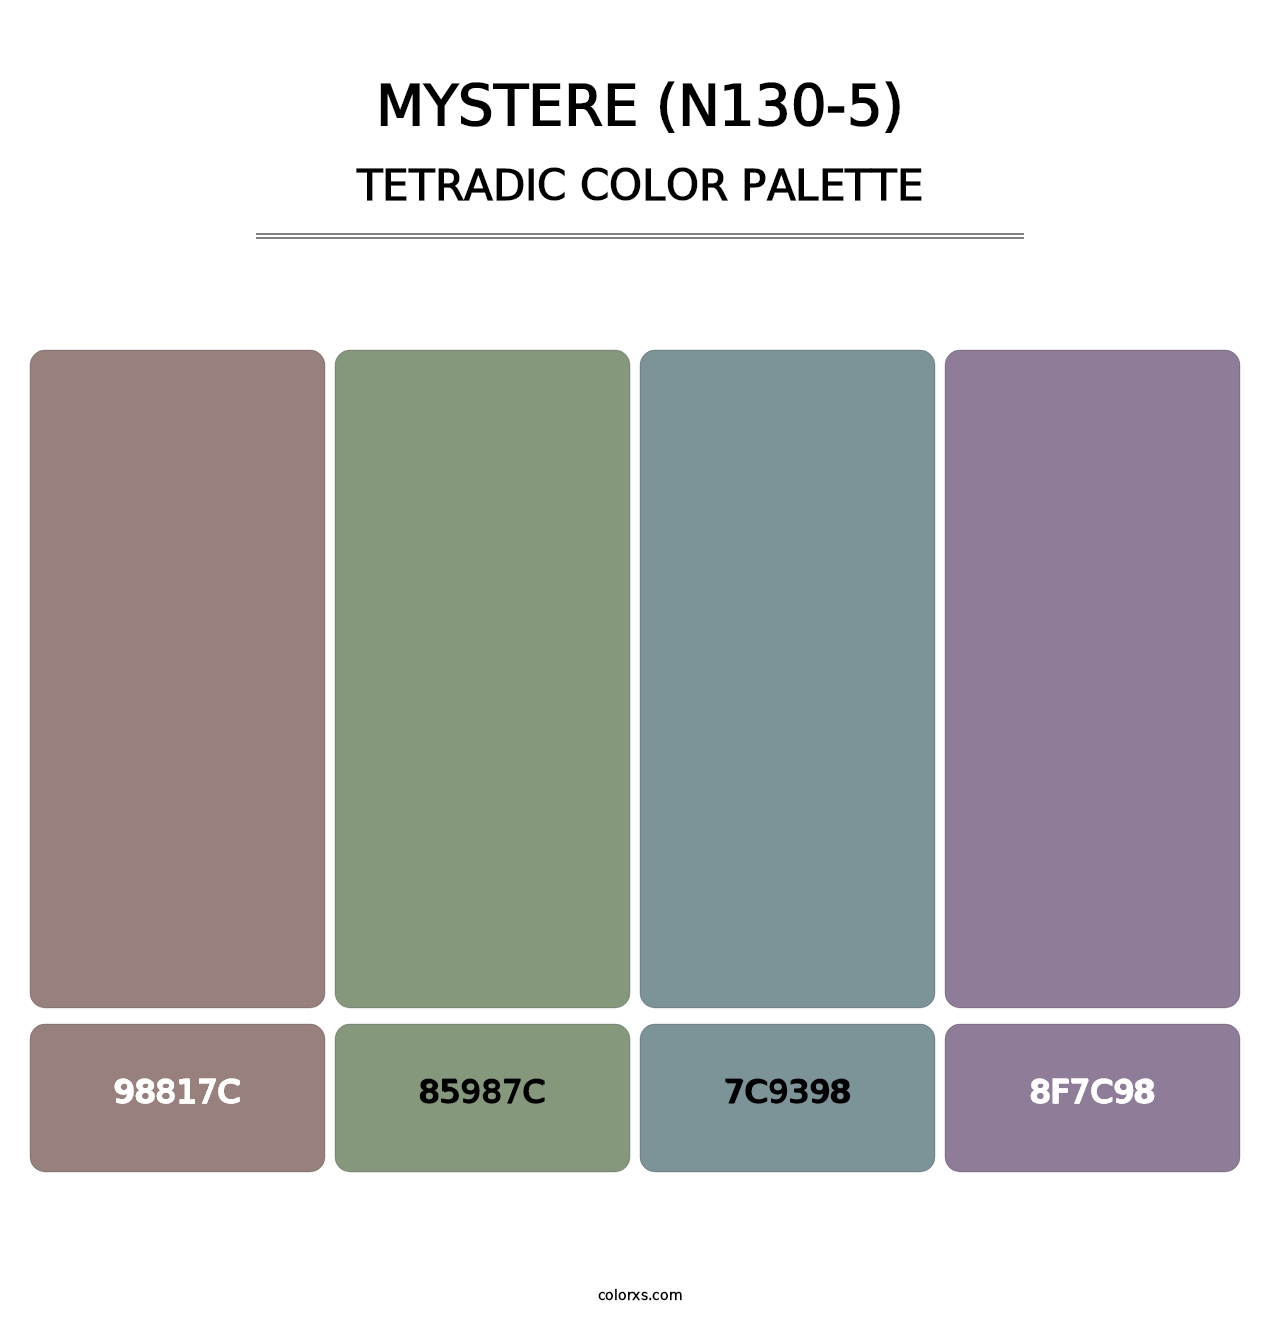 Mystere (N130-5) - Tetradic Color Palette